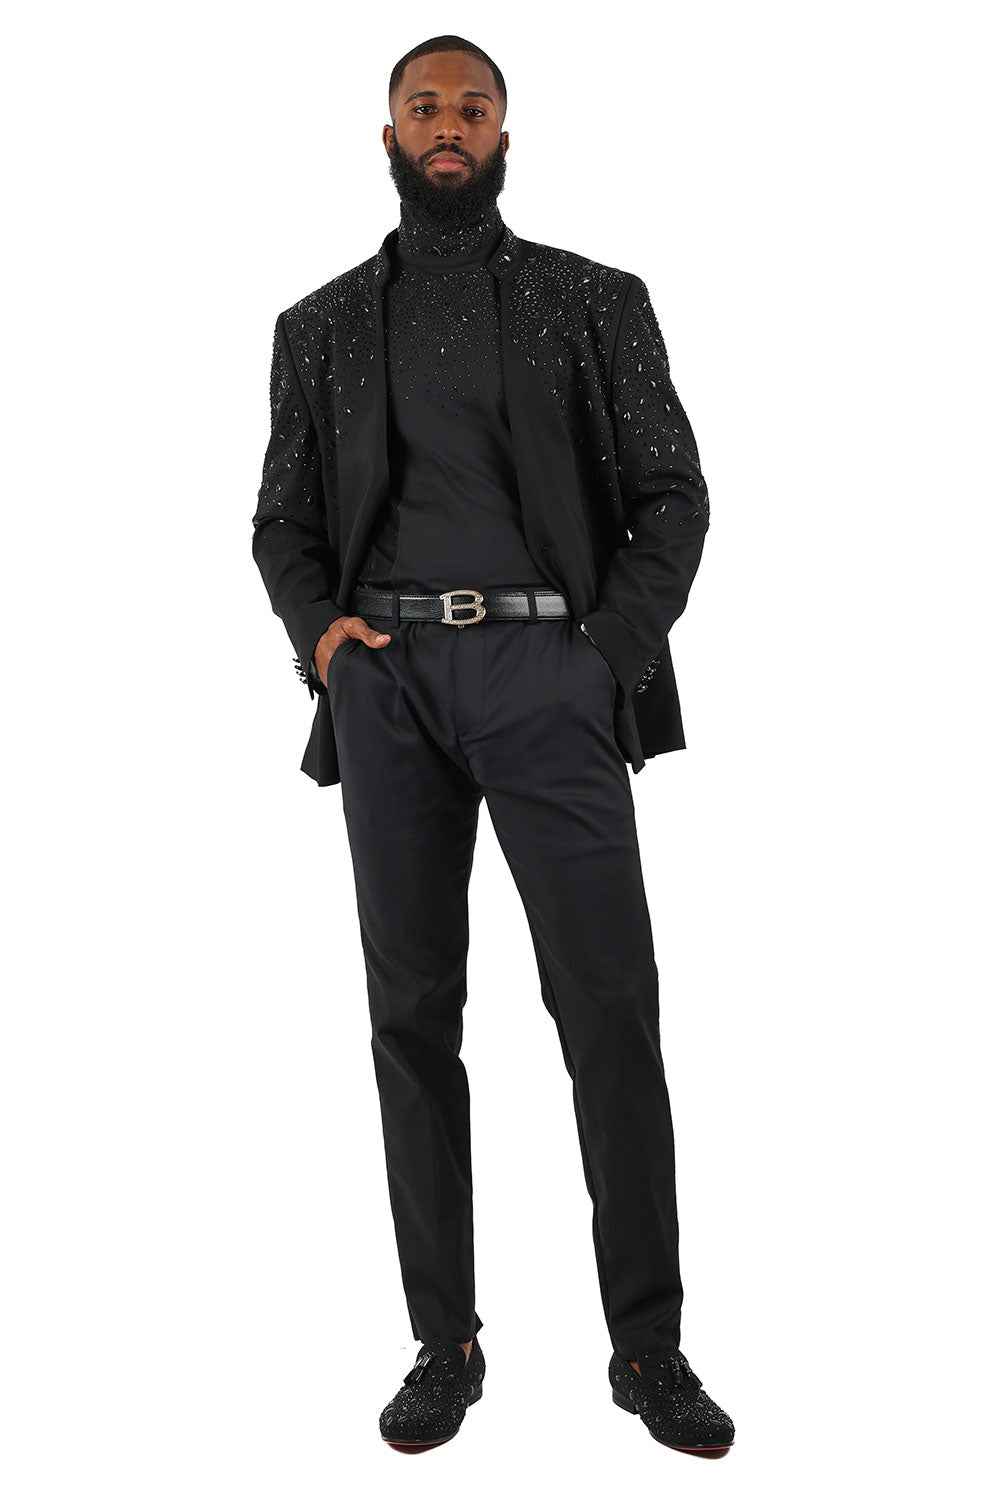 BARABAS Men's Luxury Rhinestone Long Sleeve Turtle Neck shirt 3MT04 Black and Black